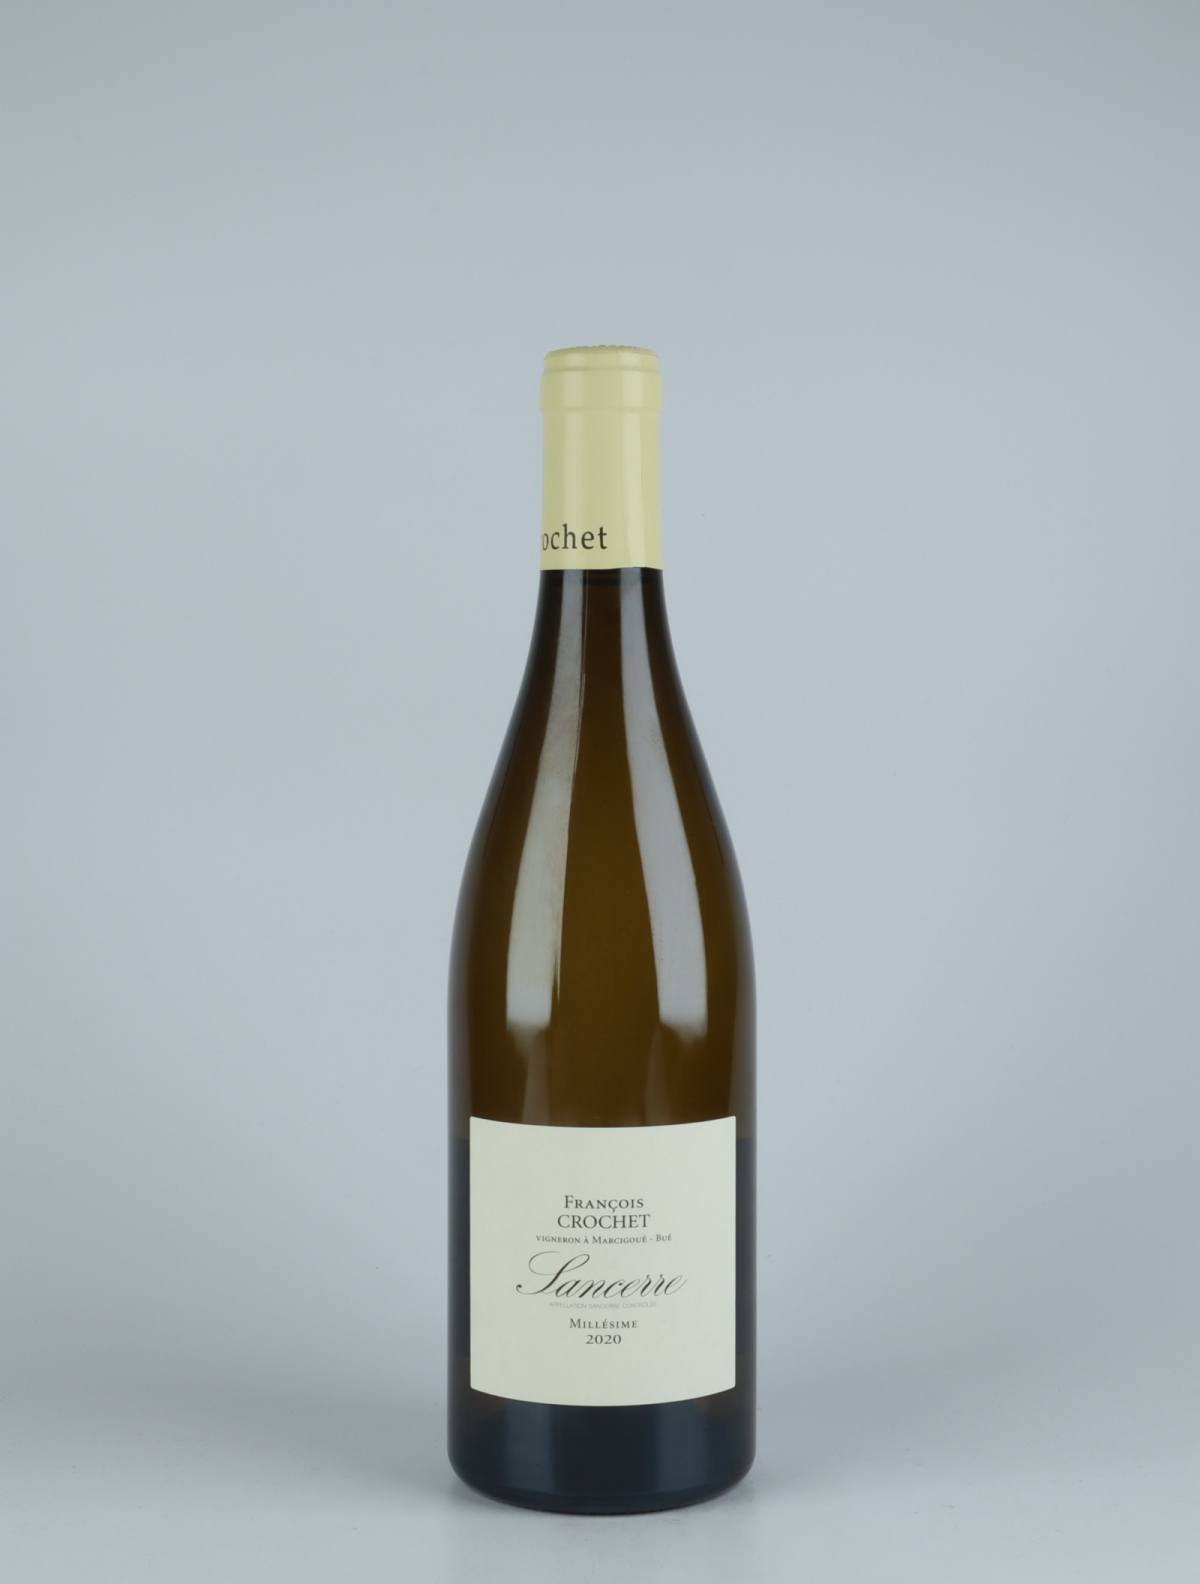 A bottle 2020 Sancerre White wine from François Crochet, Loire in France